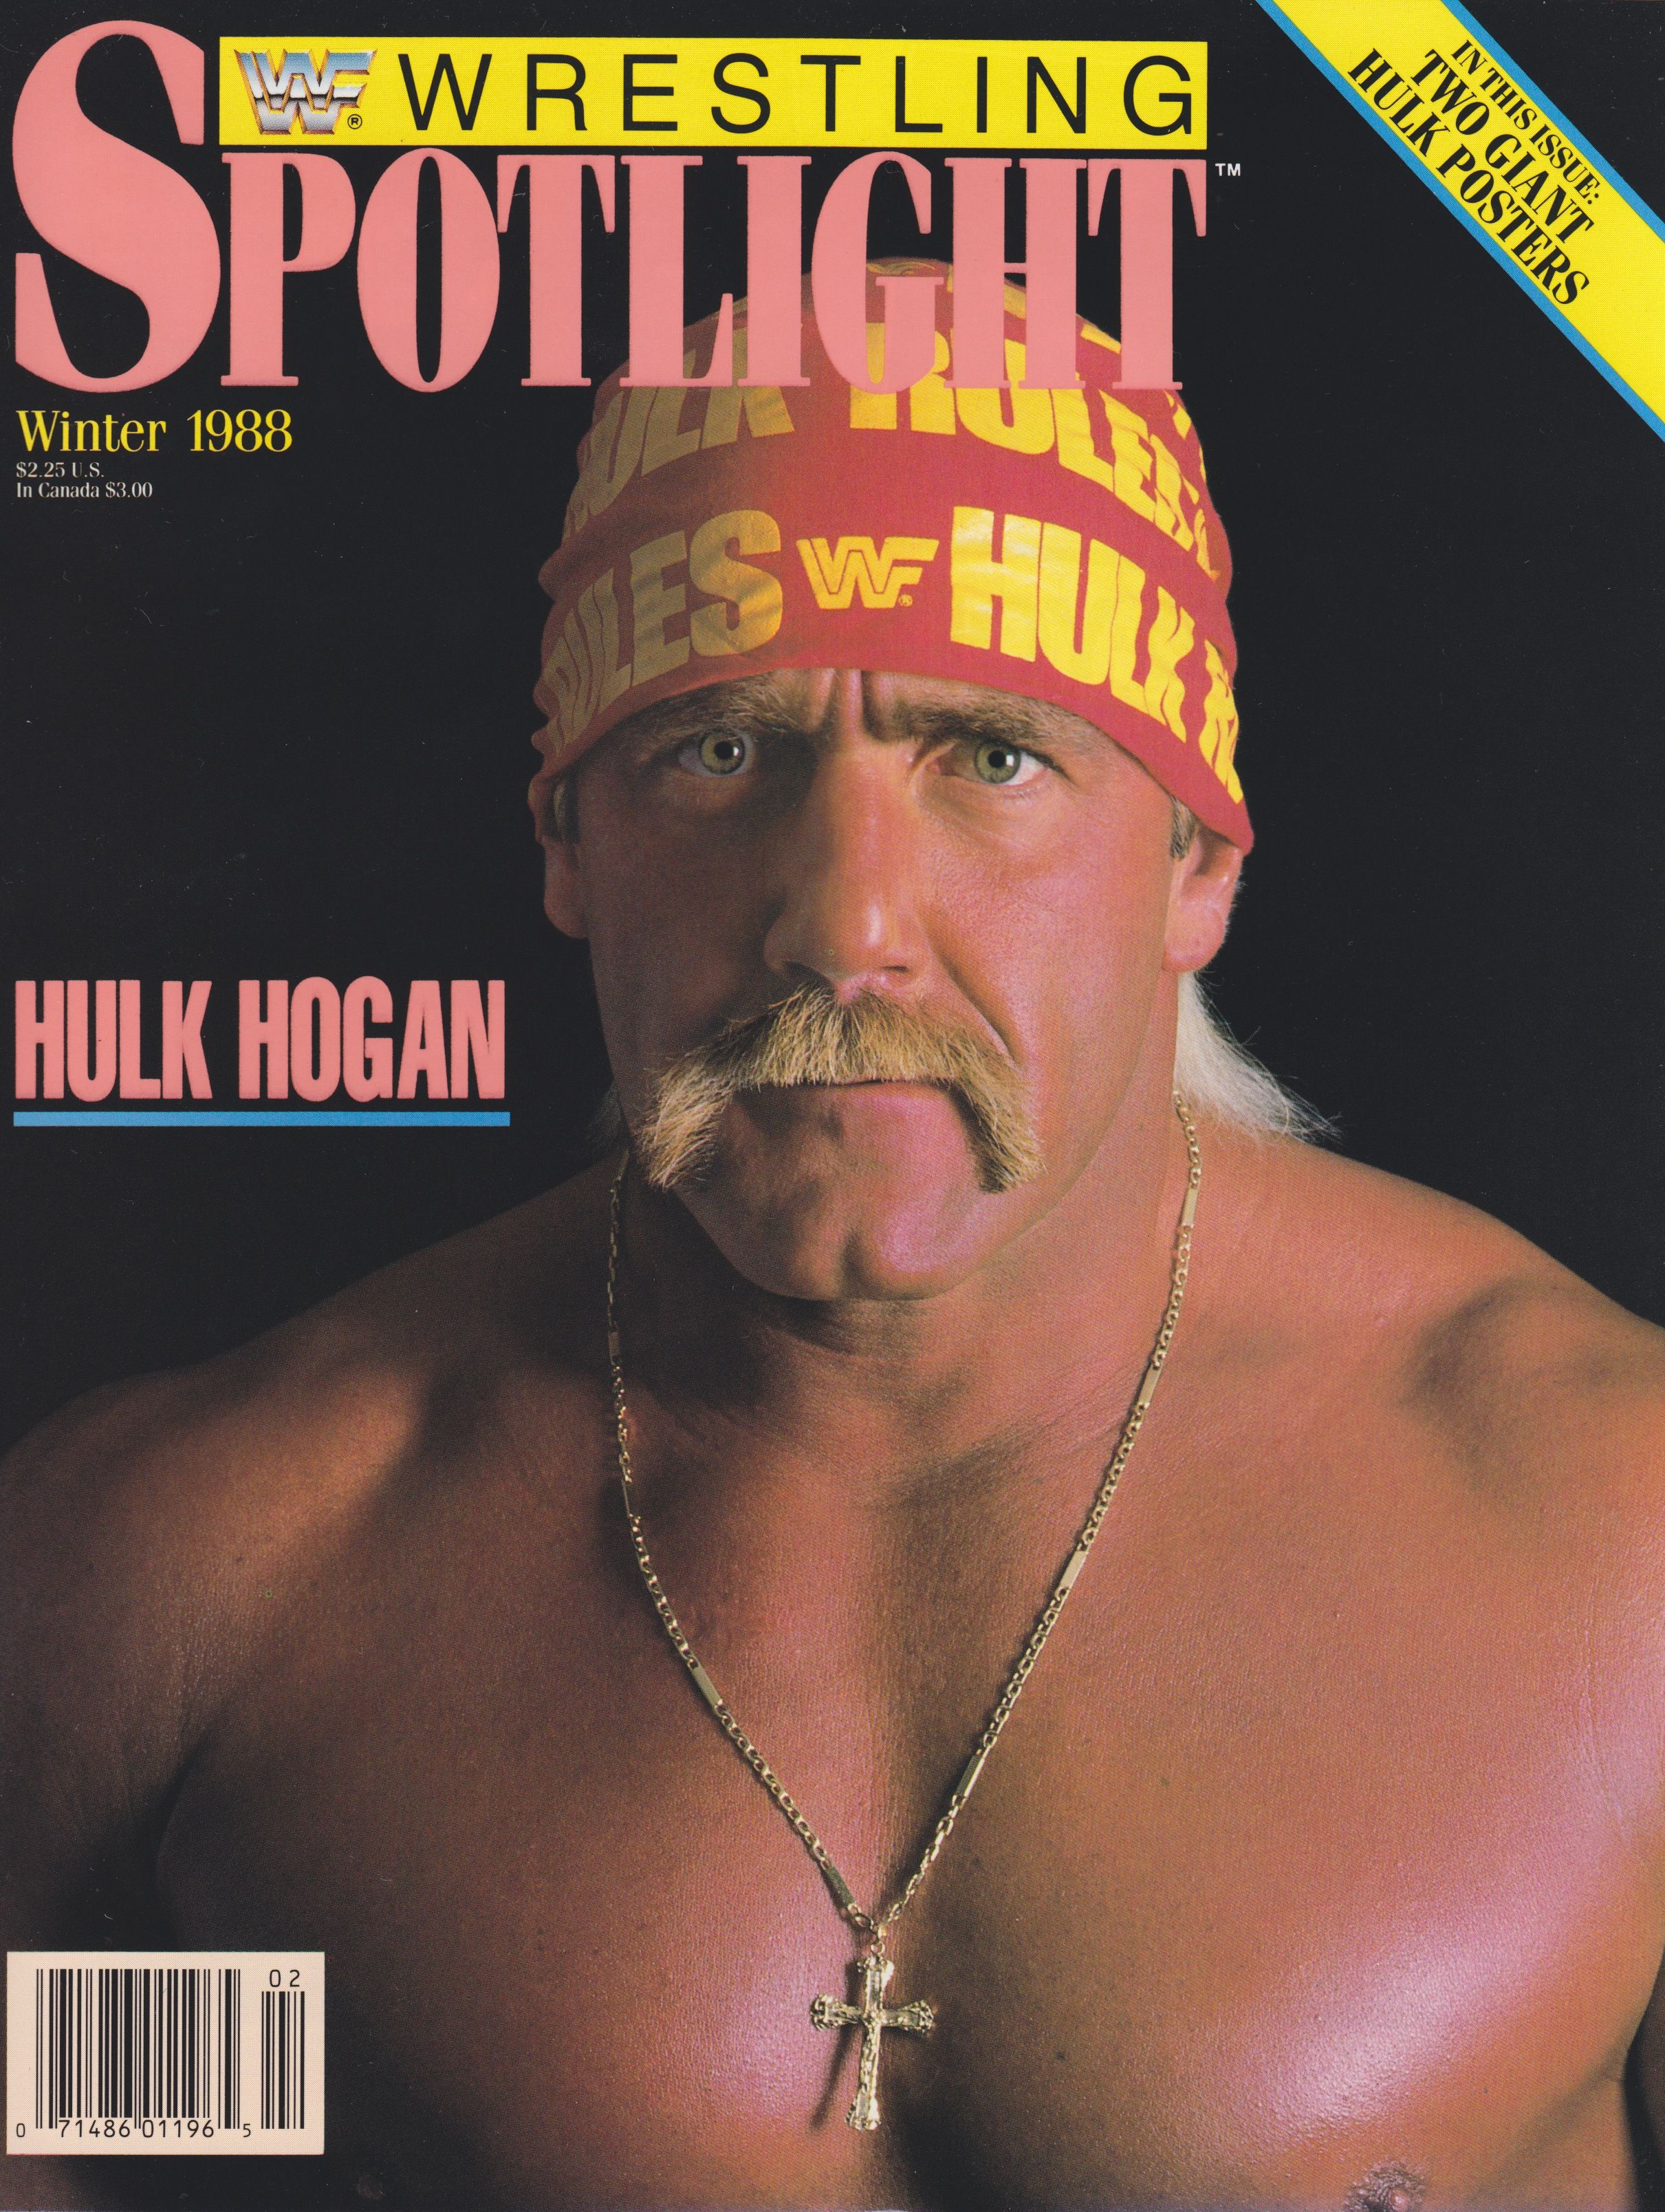 WWF Wrestling Spotlight #2 Magazine